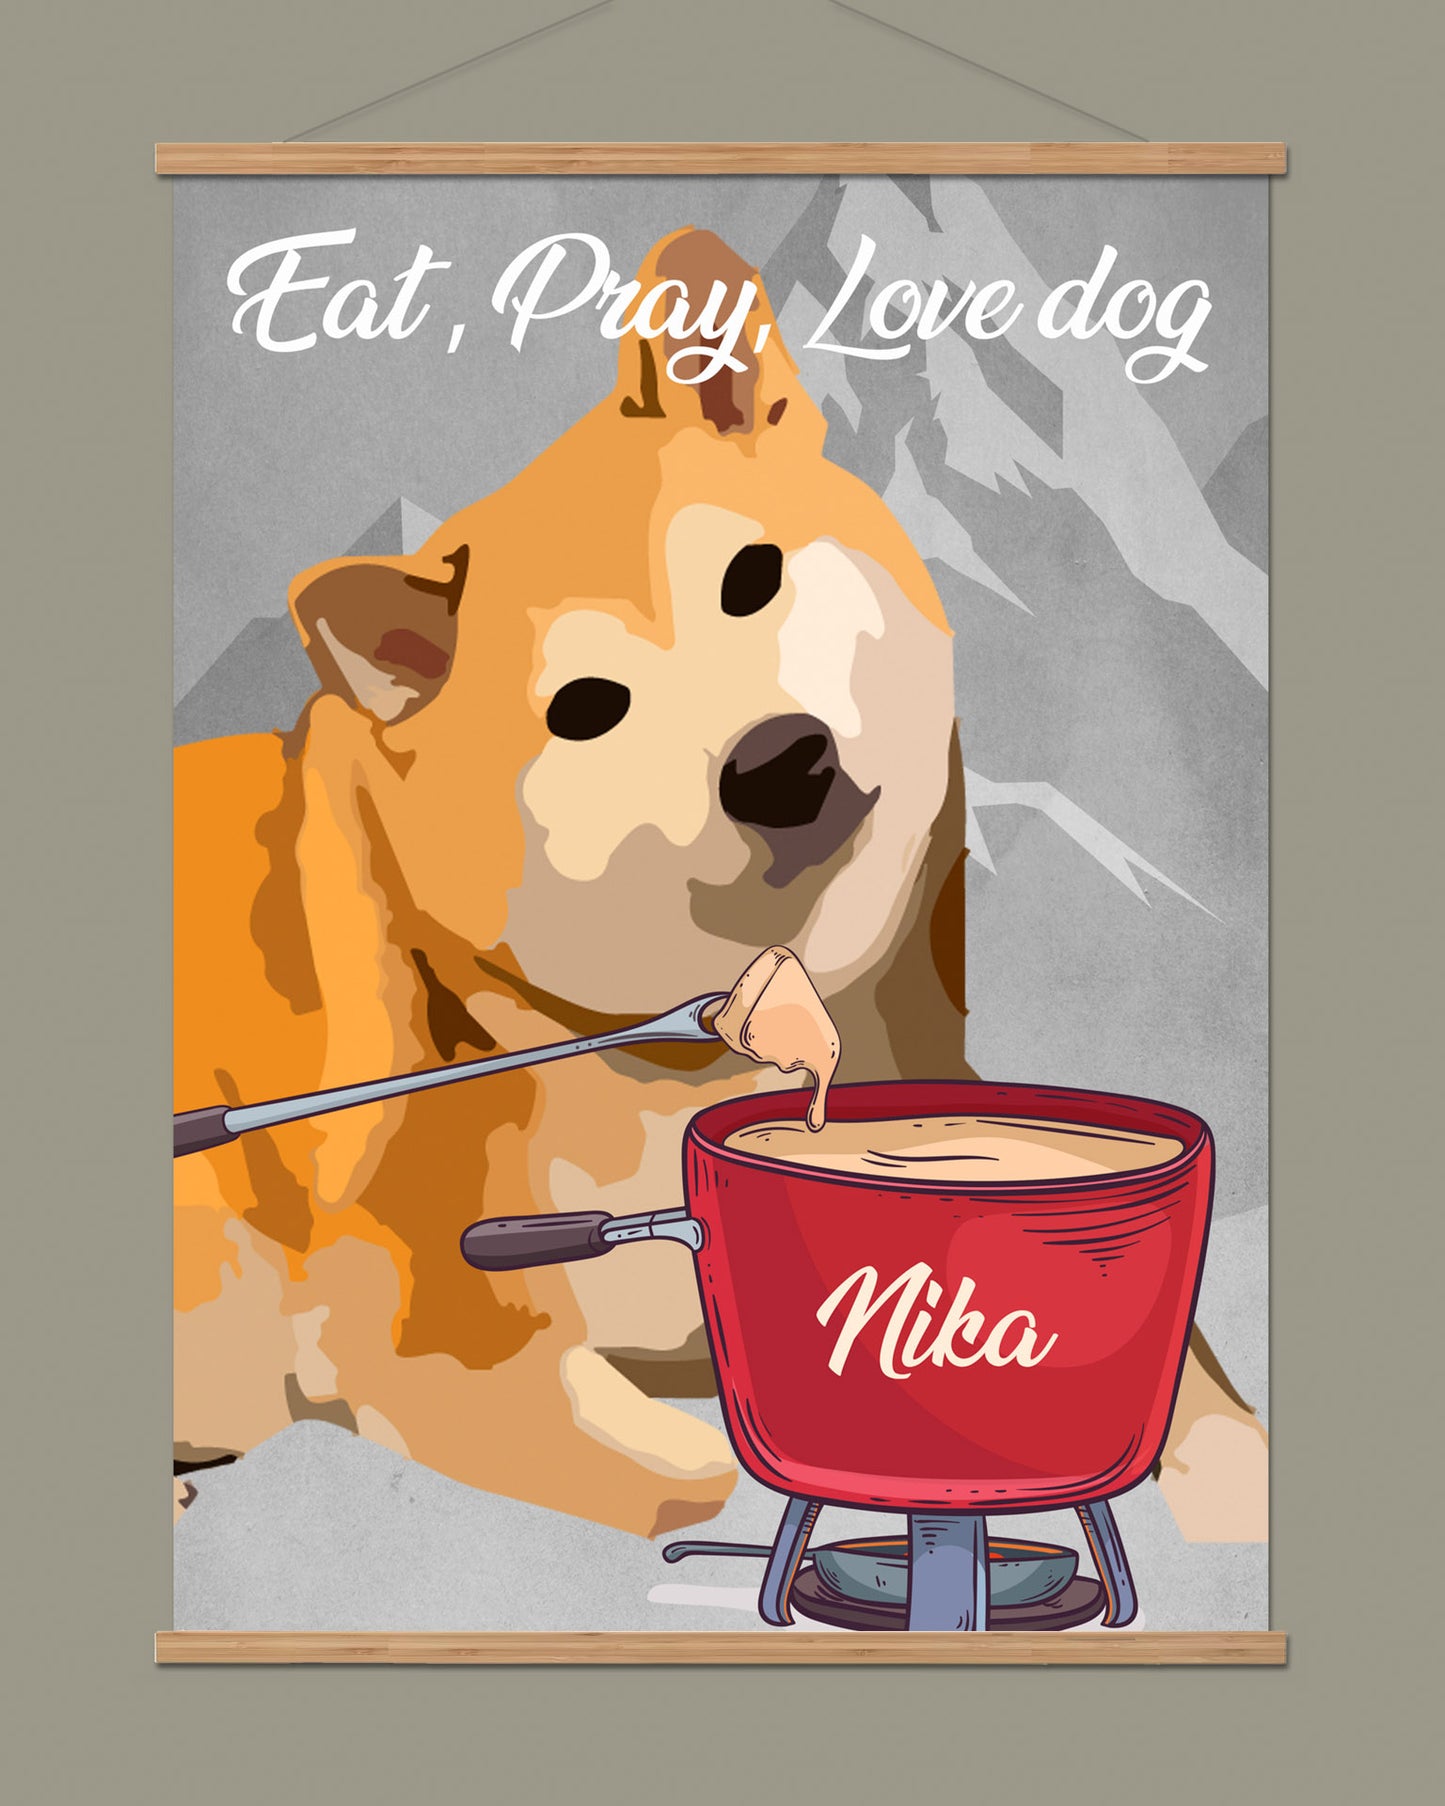 Customized dog poster "Fondue"